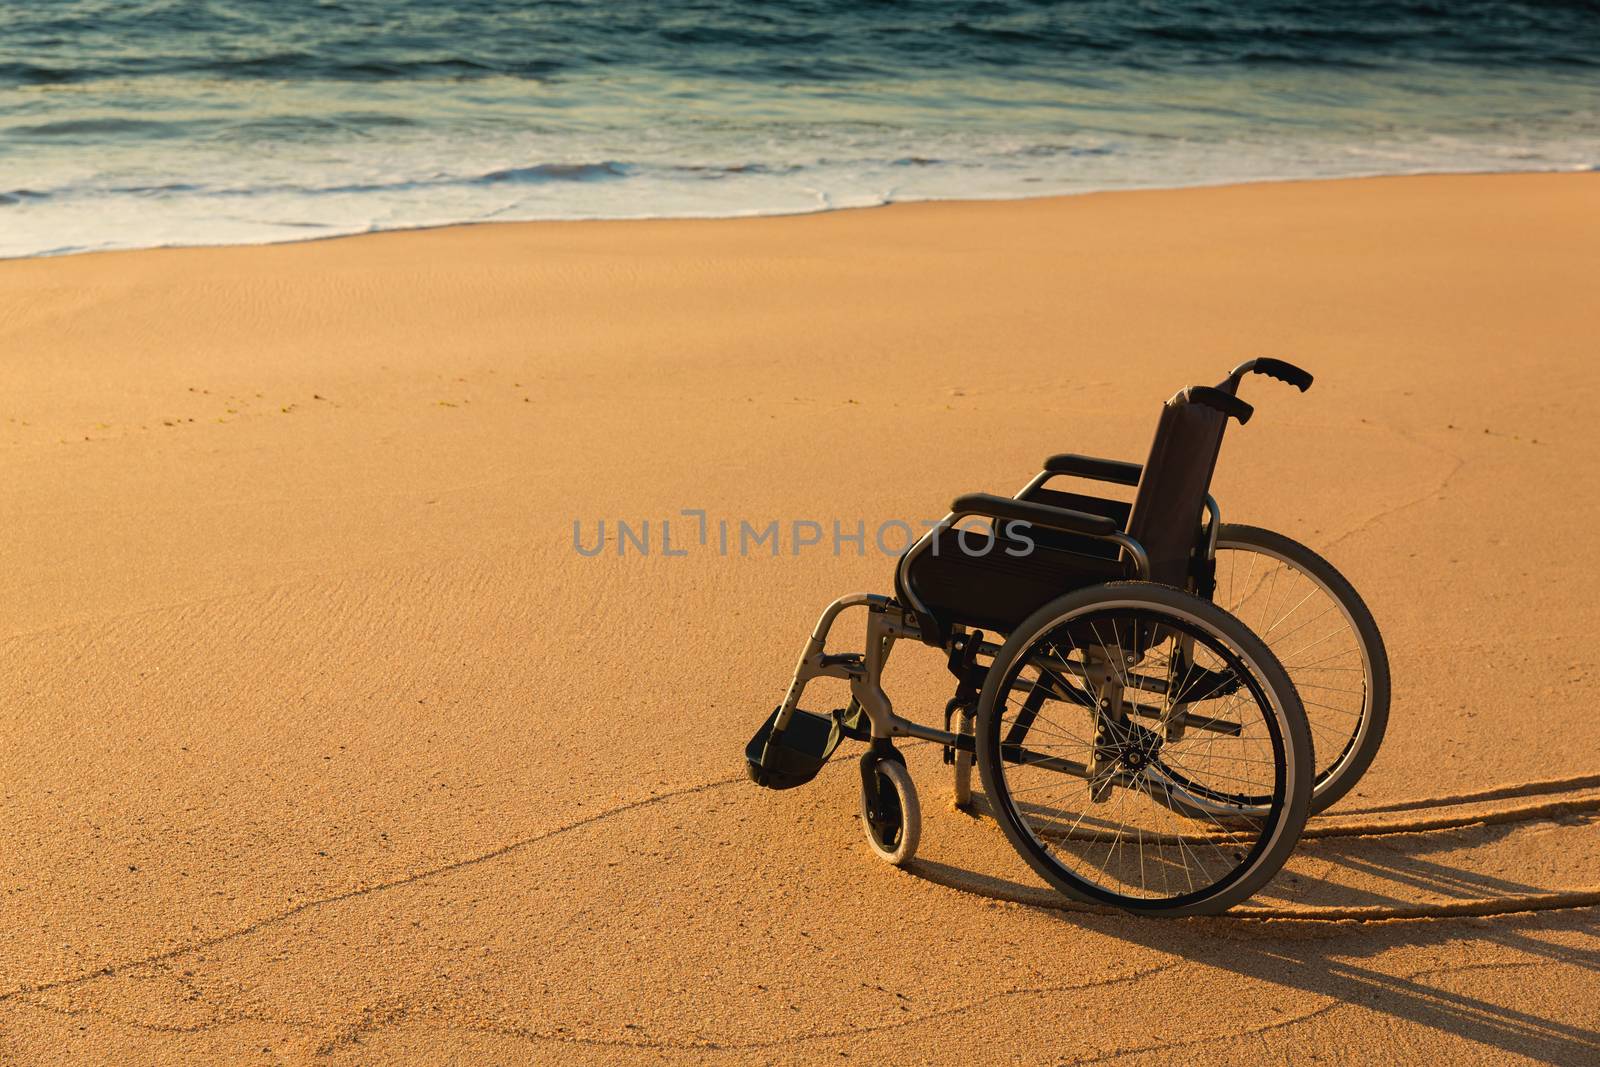 Comceptual image of a wheelchair on the beach